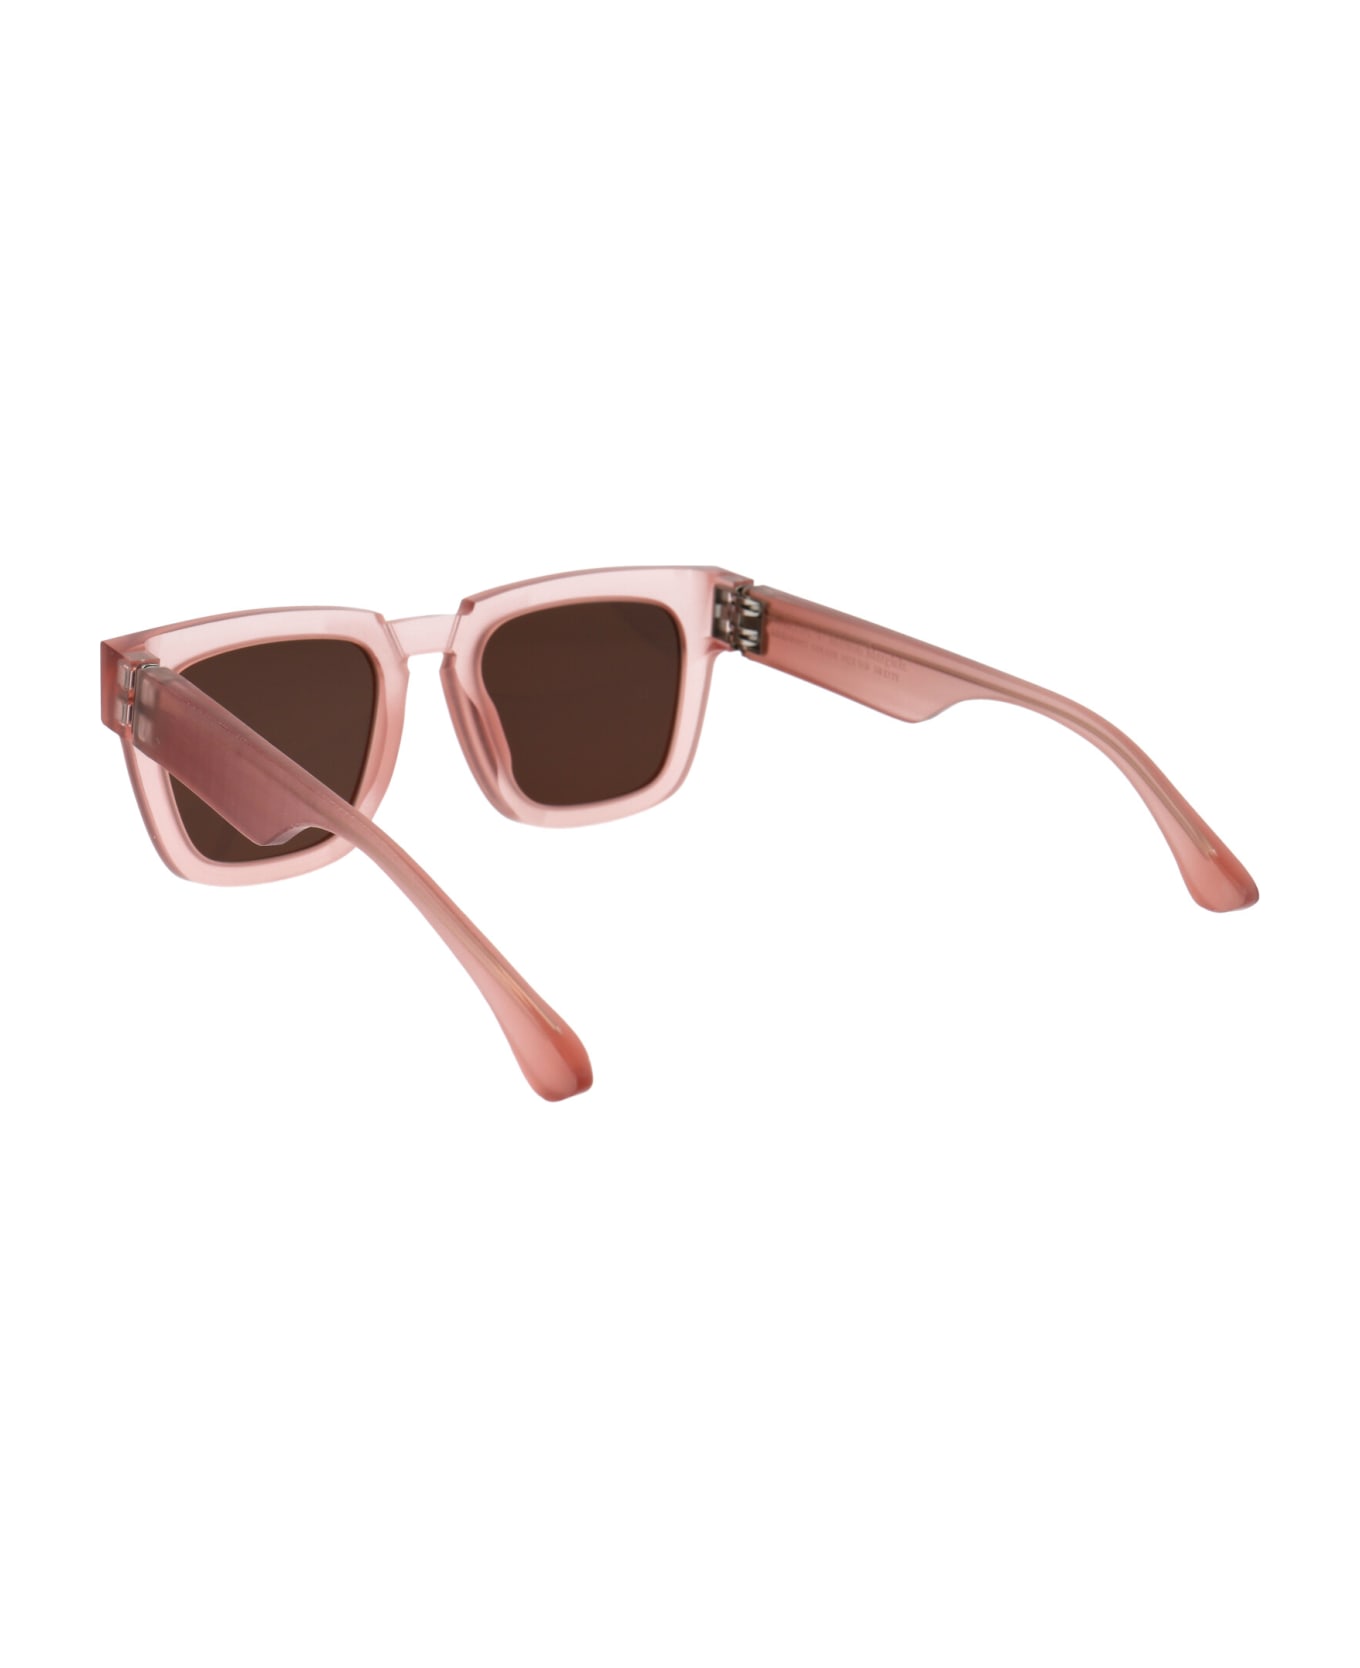 Mykita Mmraw021 Sunglasses - 829 RAW MELROSE | BROWN SOLID